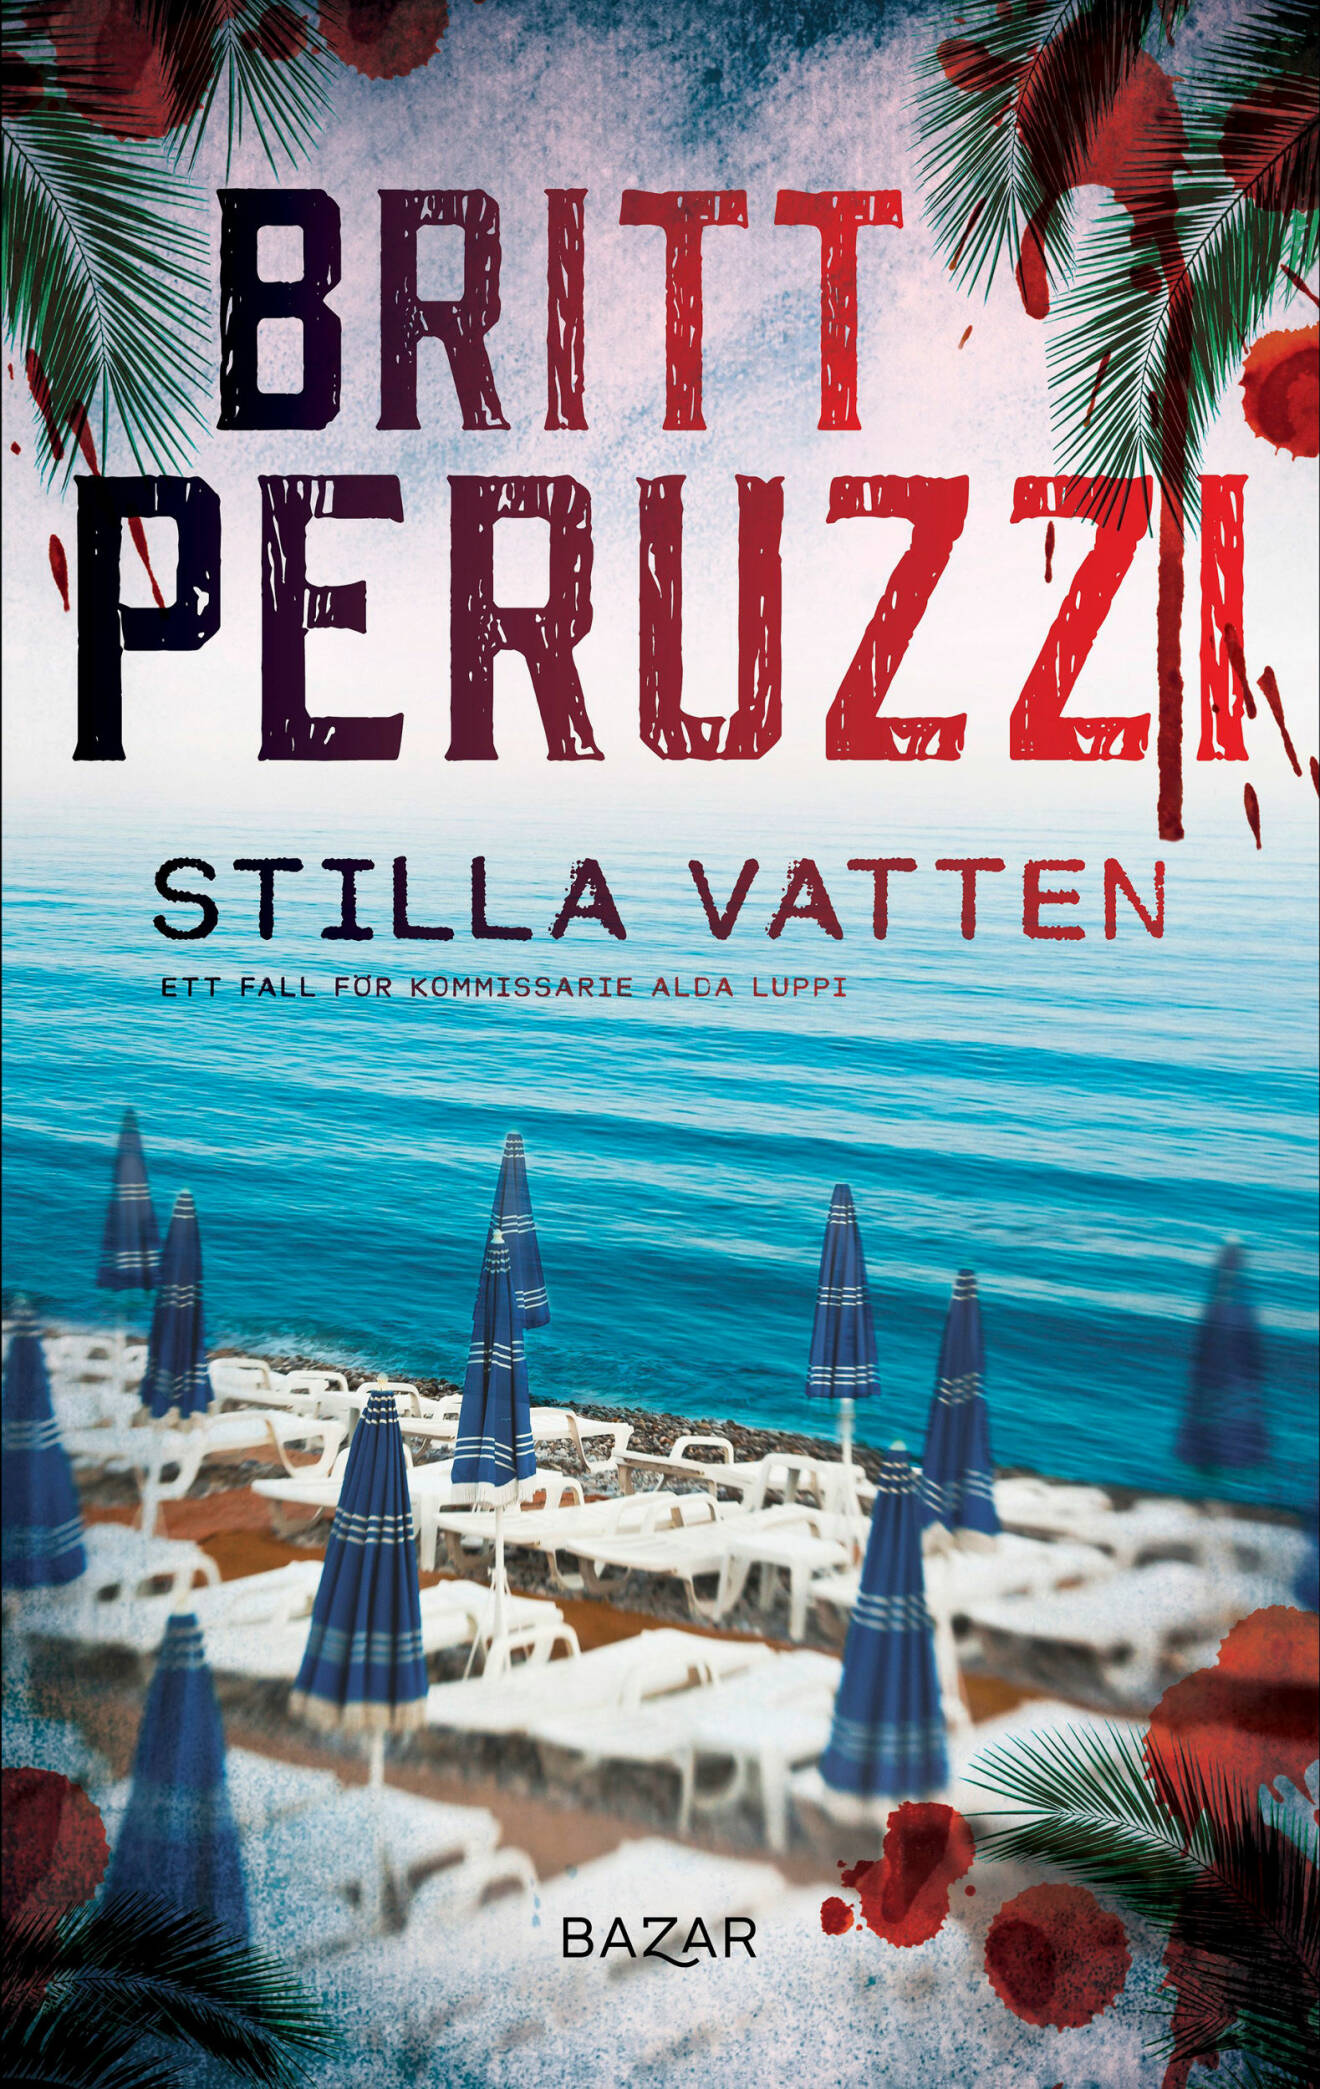 Stilla vatten, Britt Peruzzi, kriminalroman (Bazar)